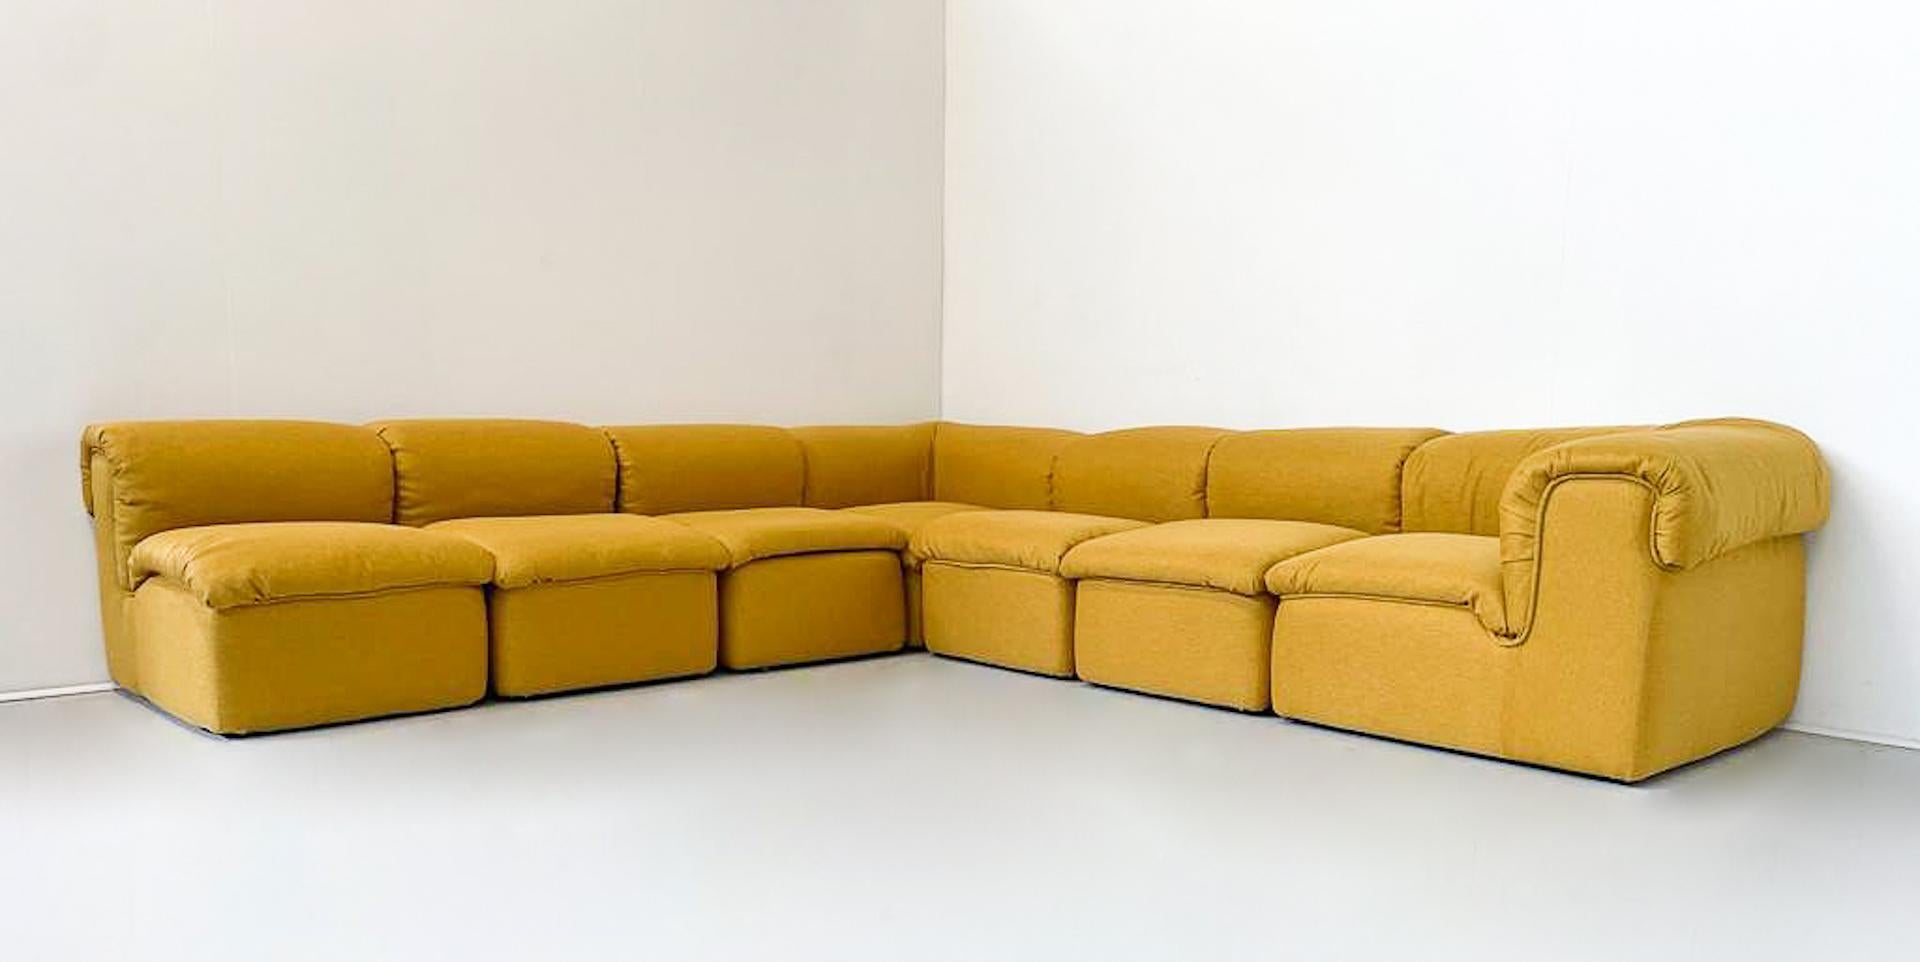 Italian Mid-Century Modern Yellow Modular Sofa, Italy, 1960s - New Upholstery